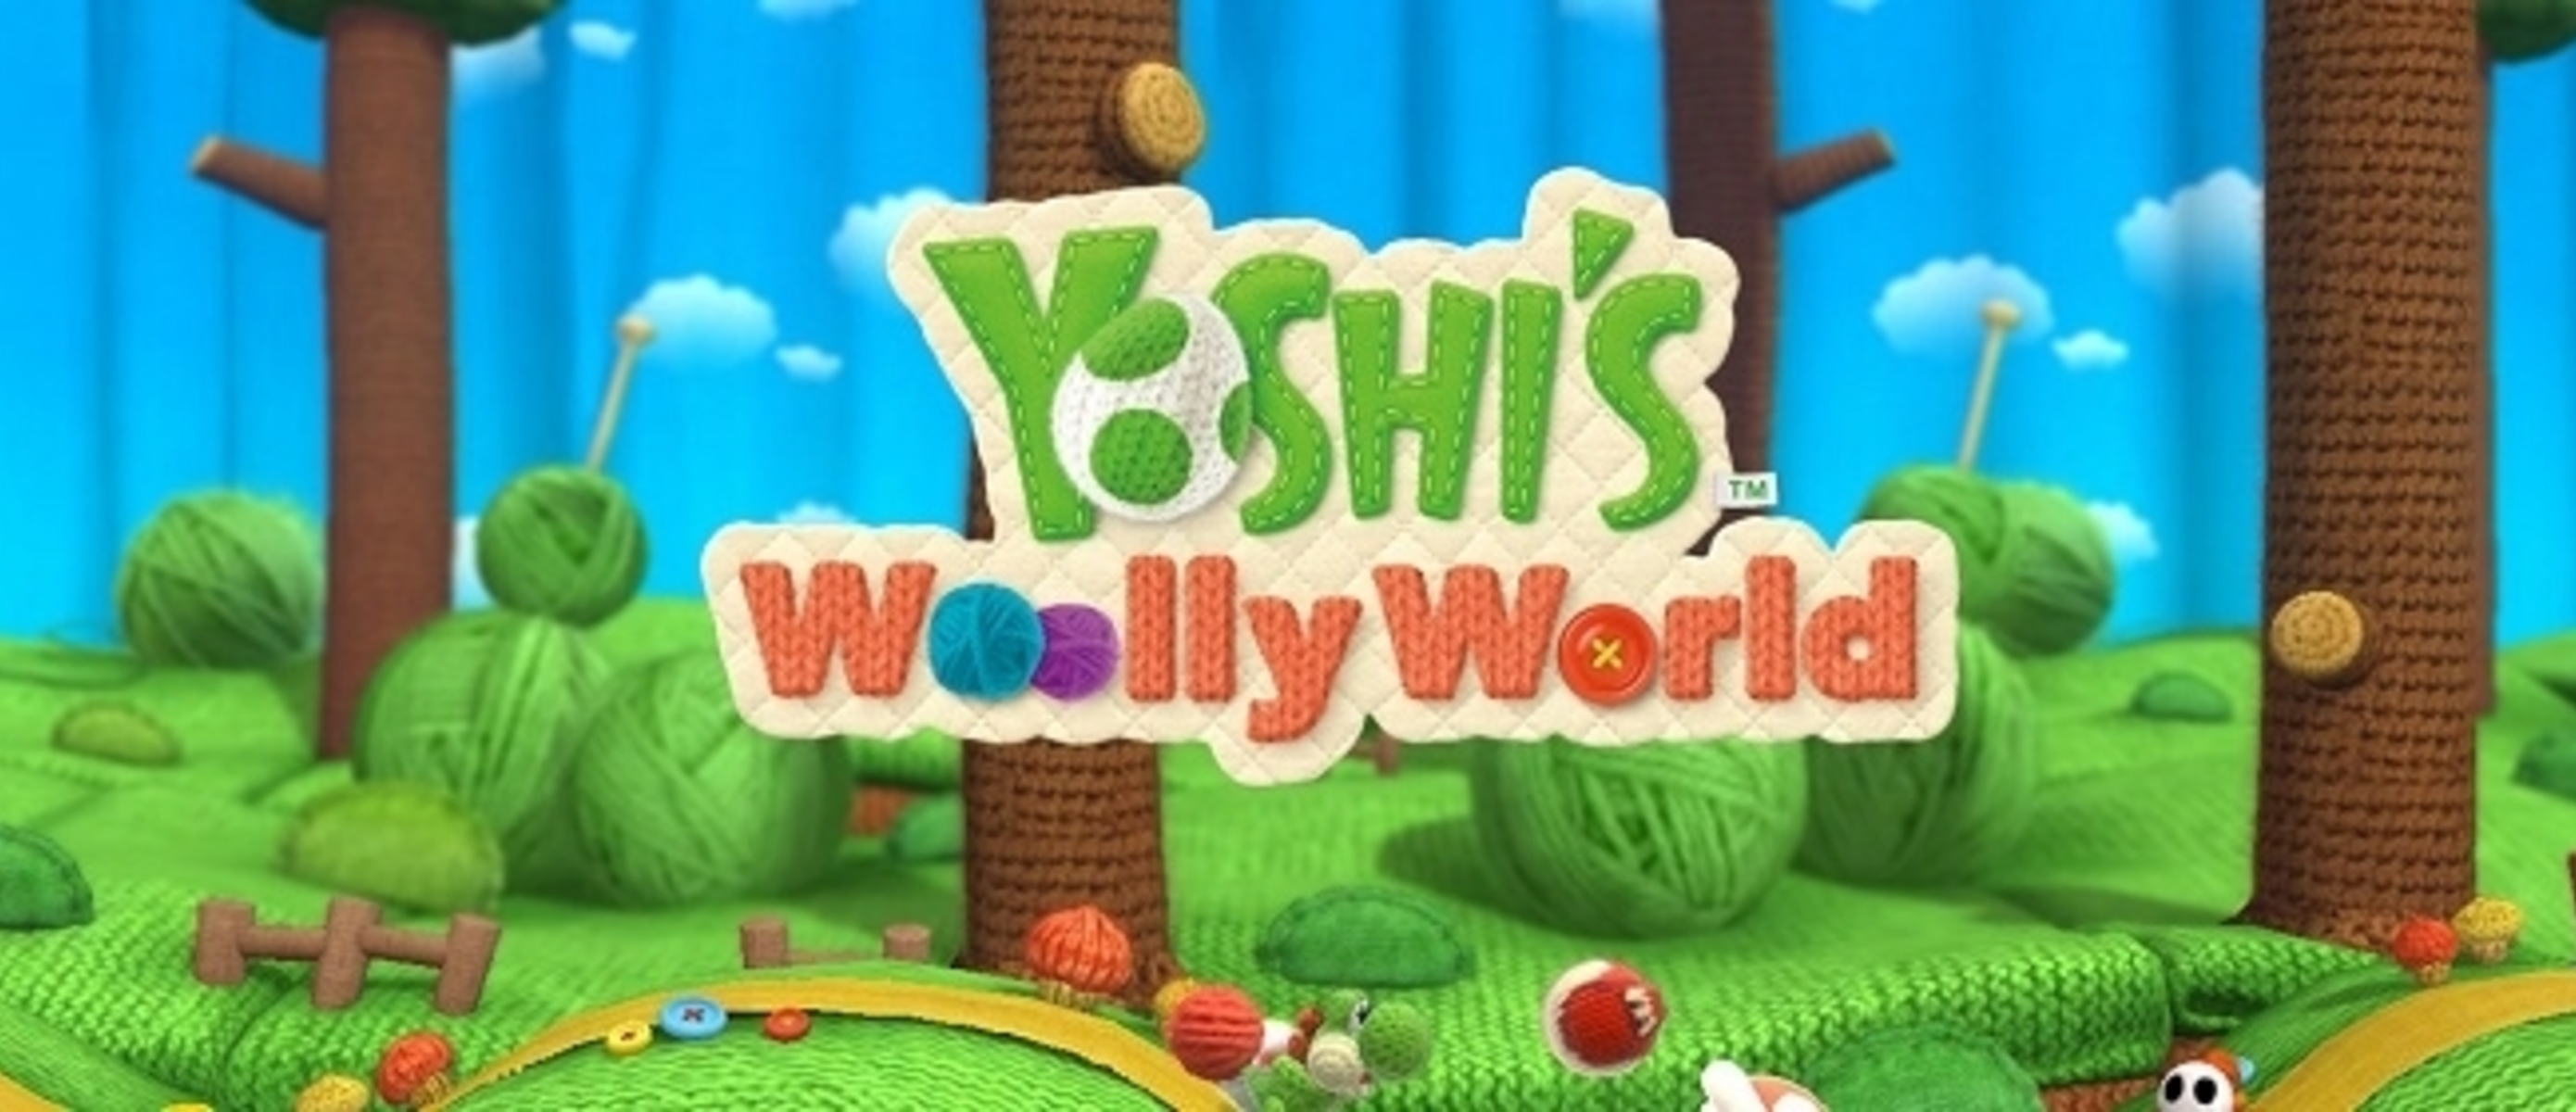 Yoshi s world. Йоши игра. Ёши вули ворлд. Йоши игра на Нинтендо. Wooly игра.